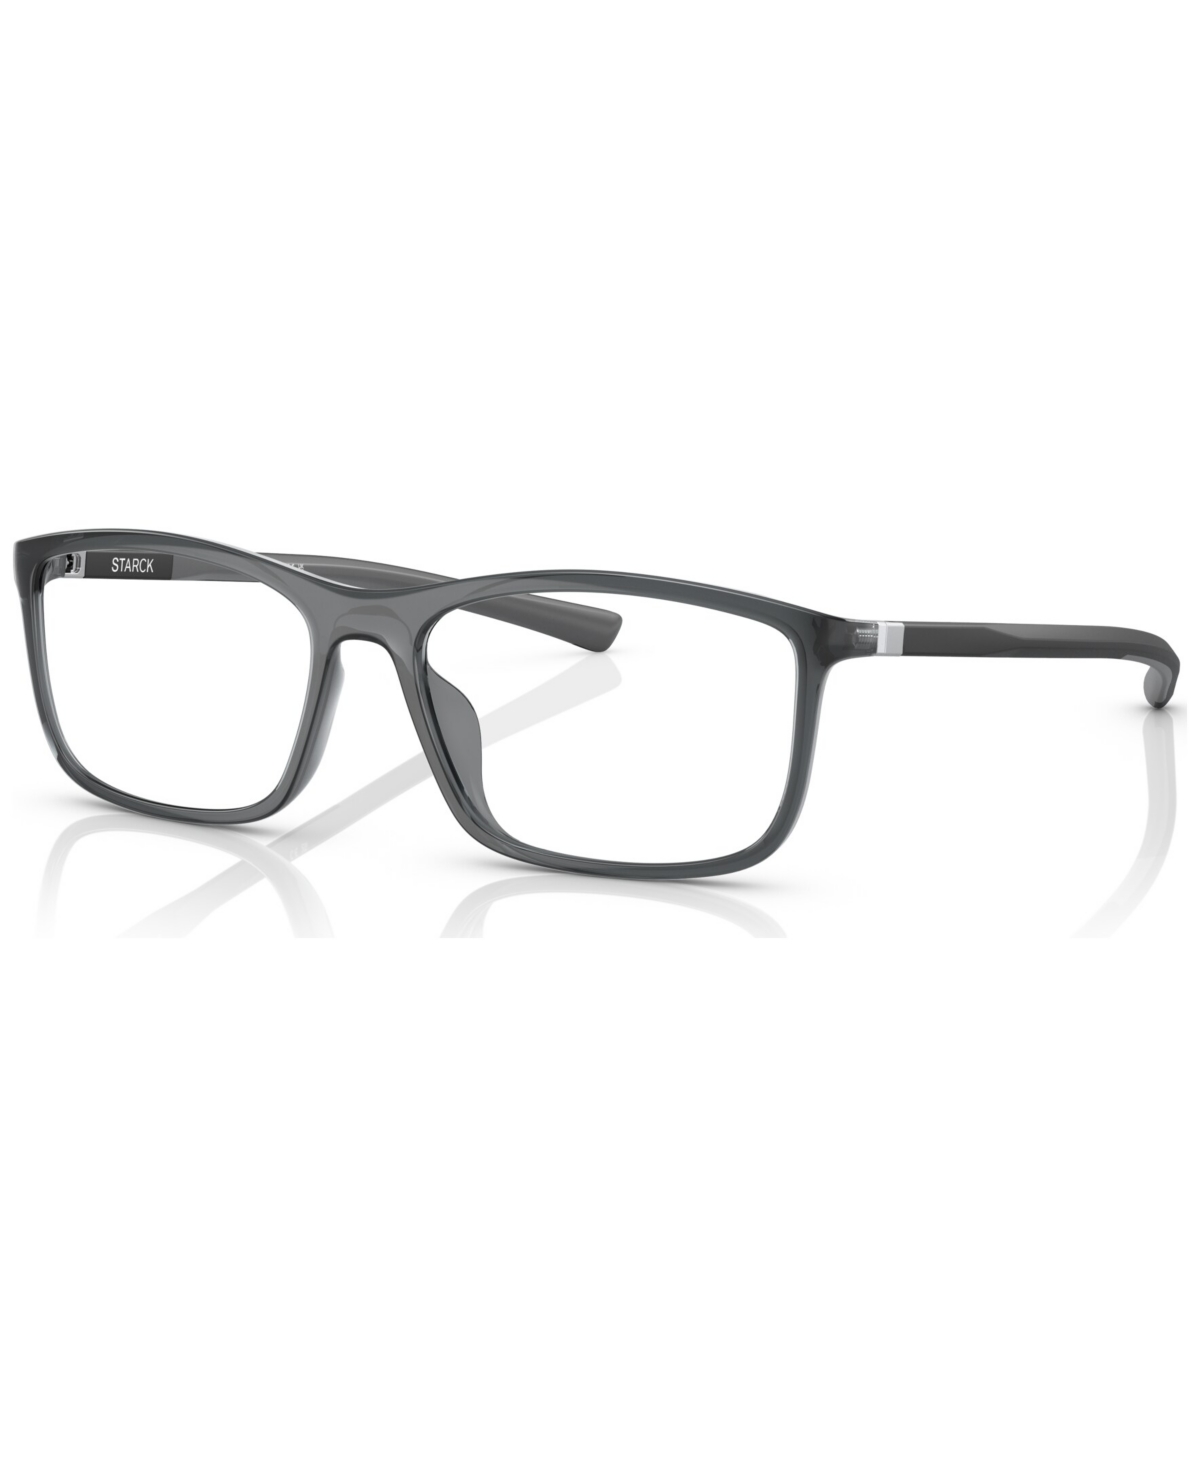 Men's Eyeglasses, SH3048 55 - Transparent Gray